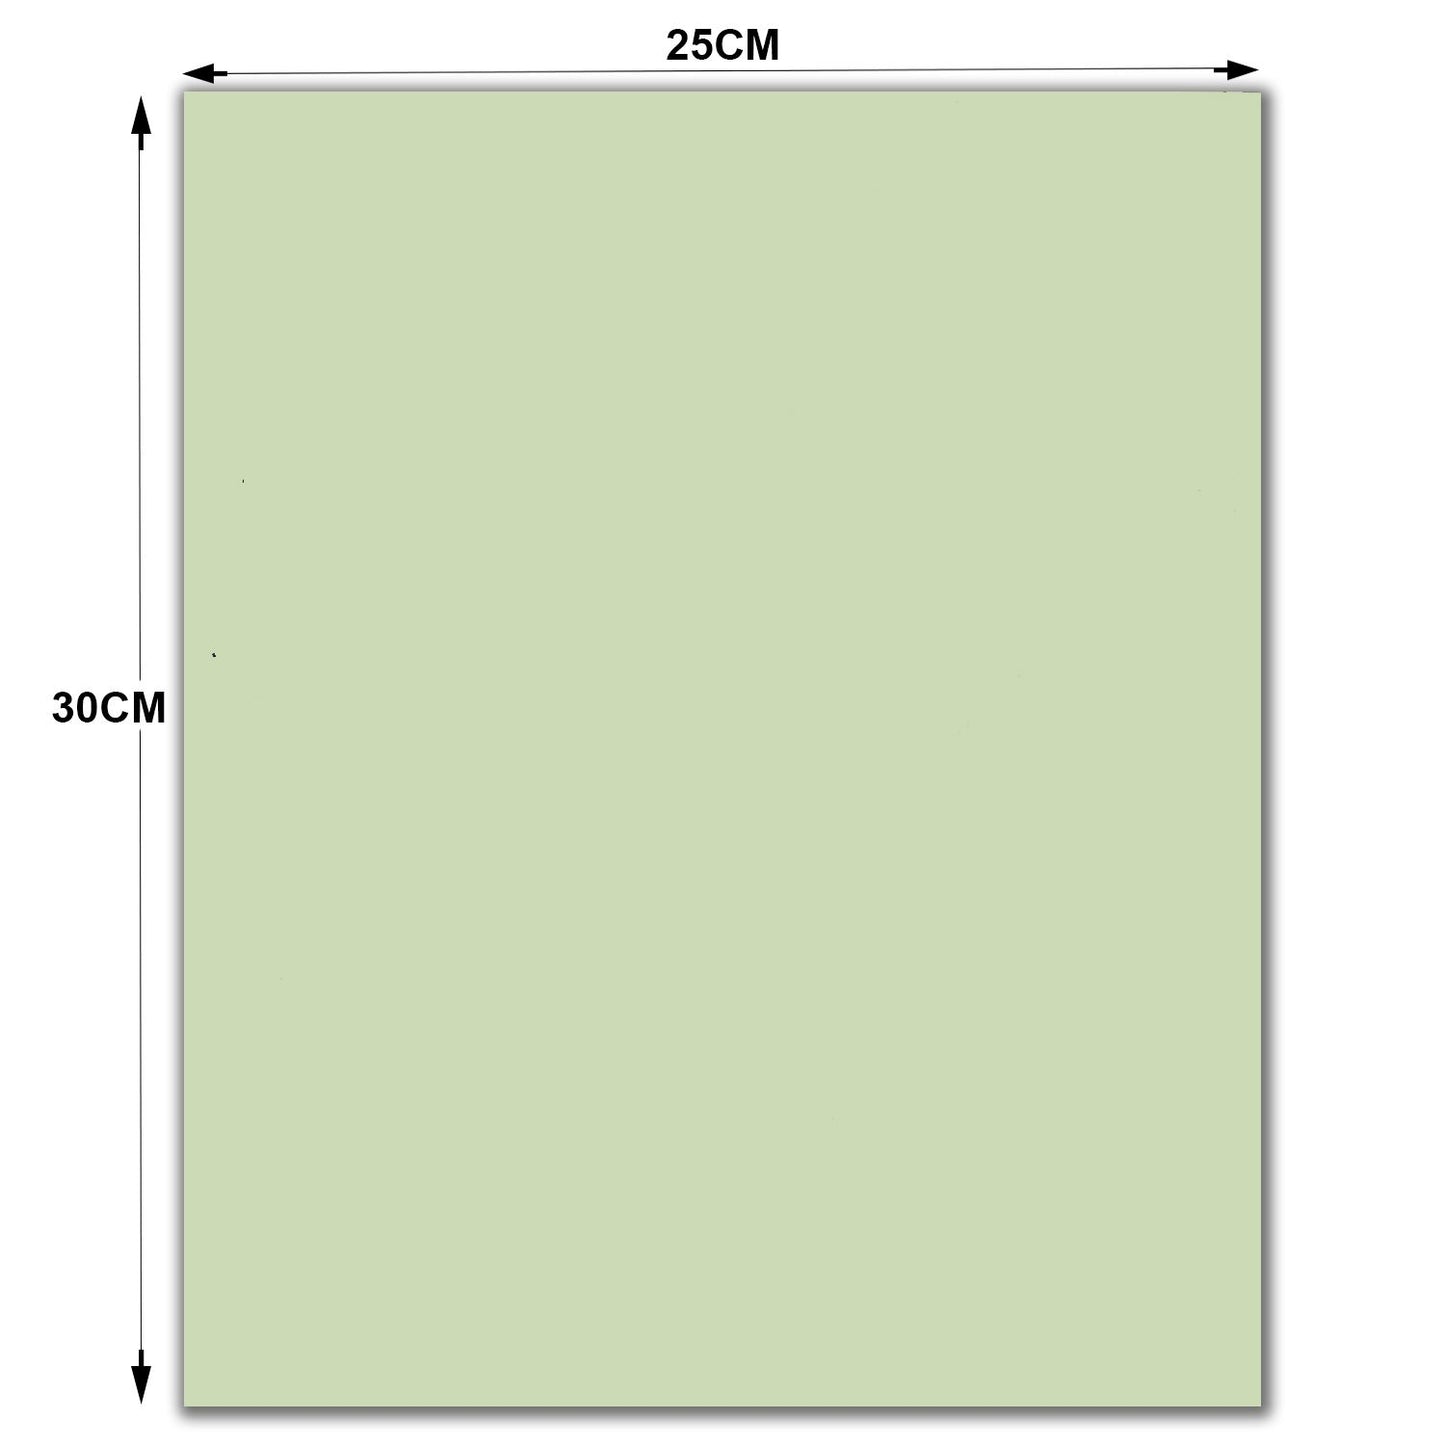 Scratchplate Pickguard 3-ply Material - 29cm x 24cm - Mint Green